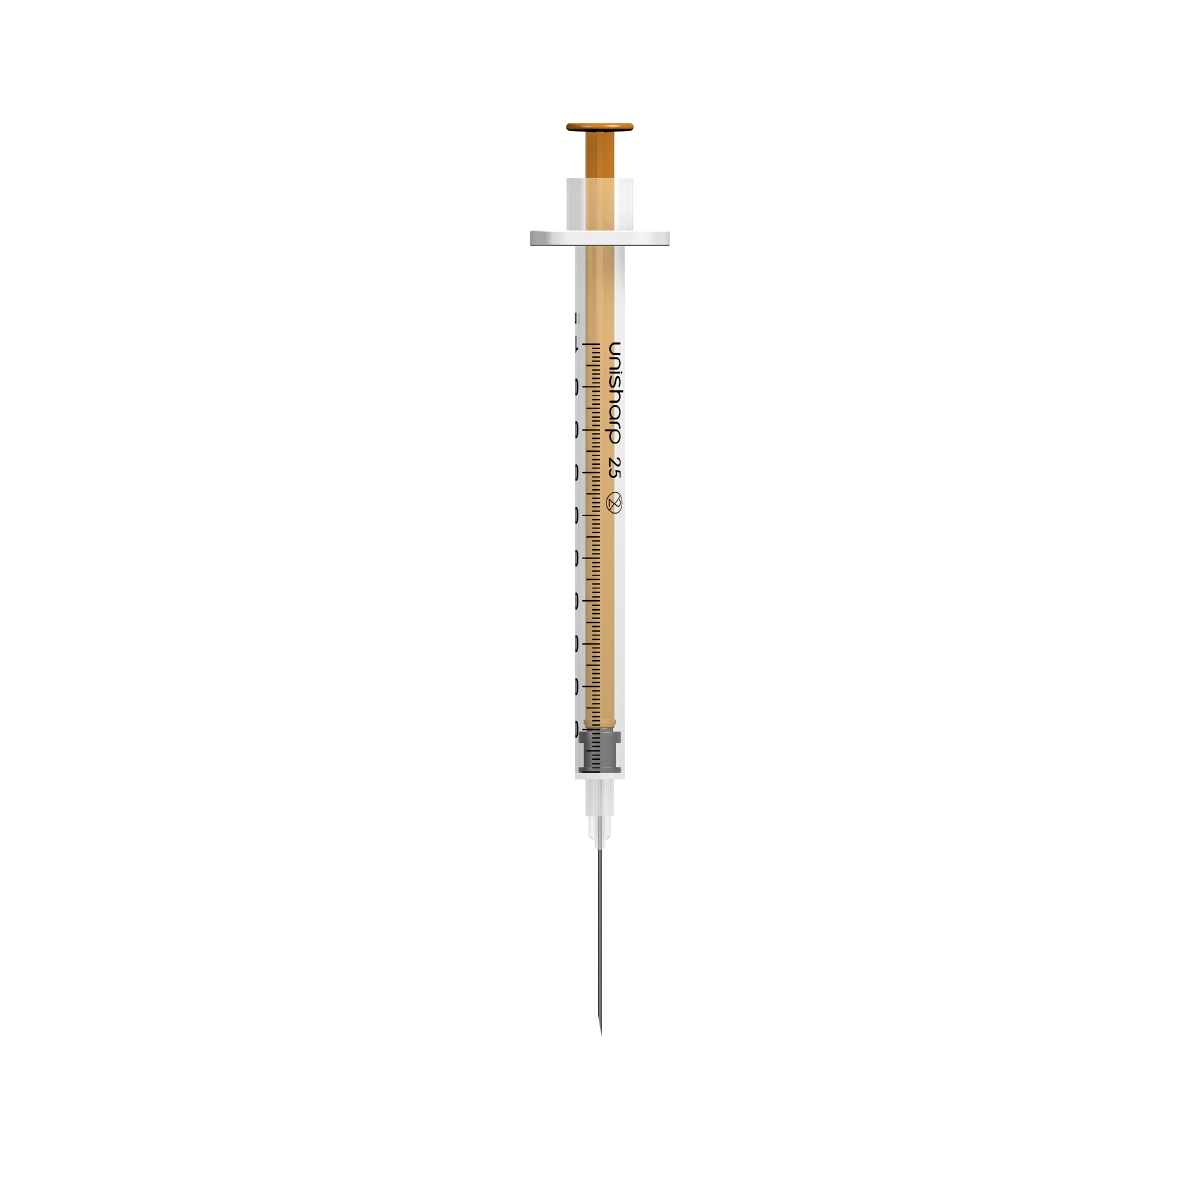 Unisharp 1mL 25G (25mm) Fixed Needle Low Dead Space Syringe